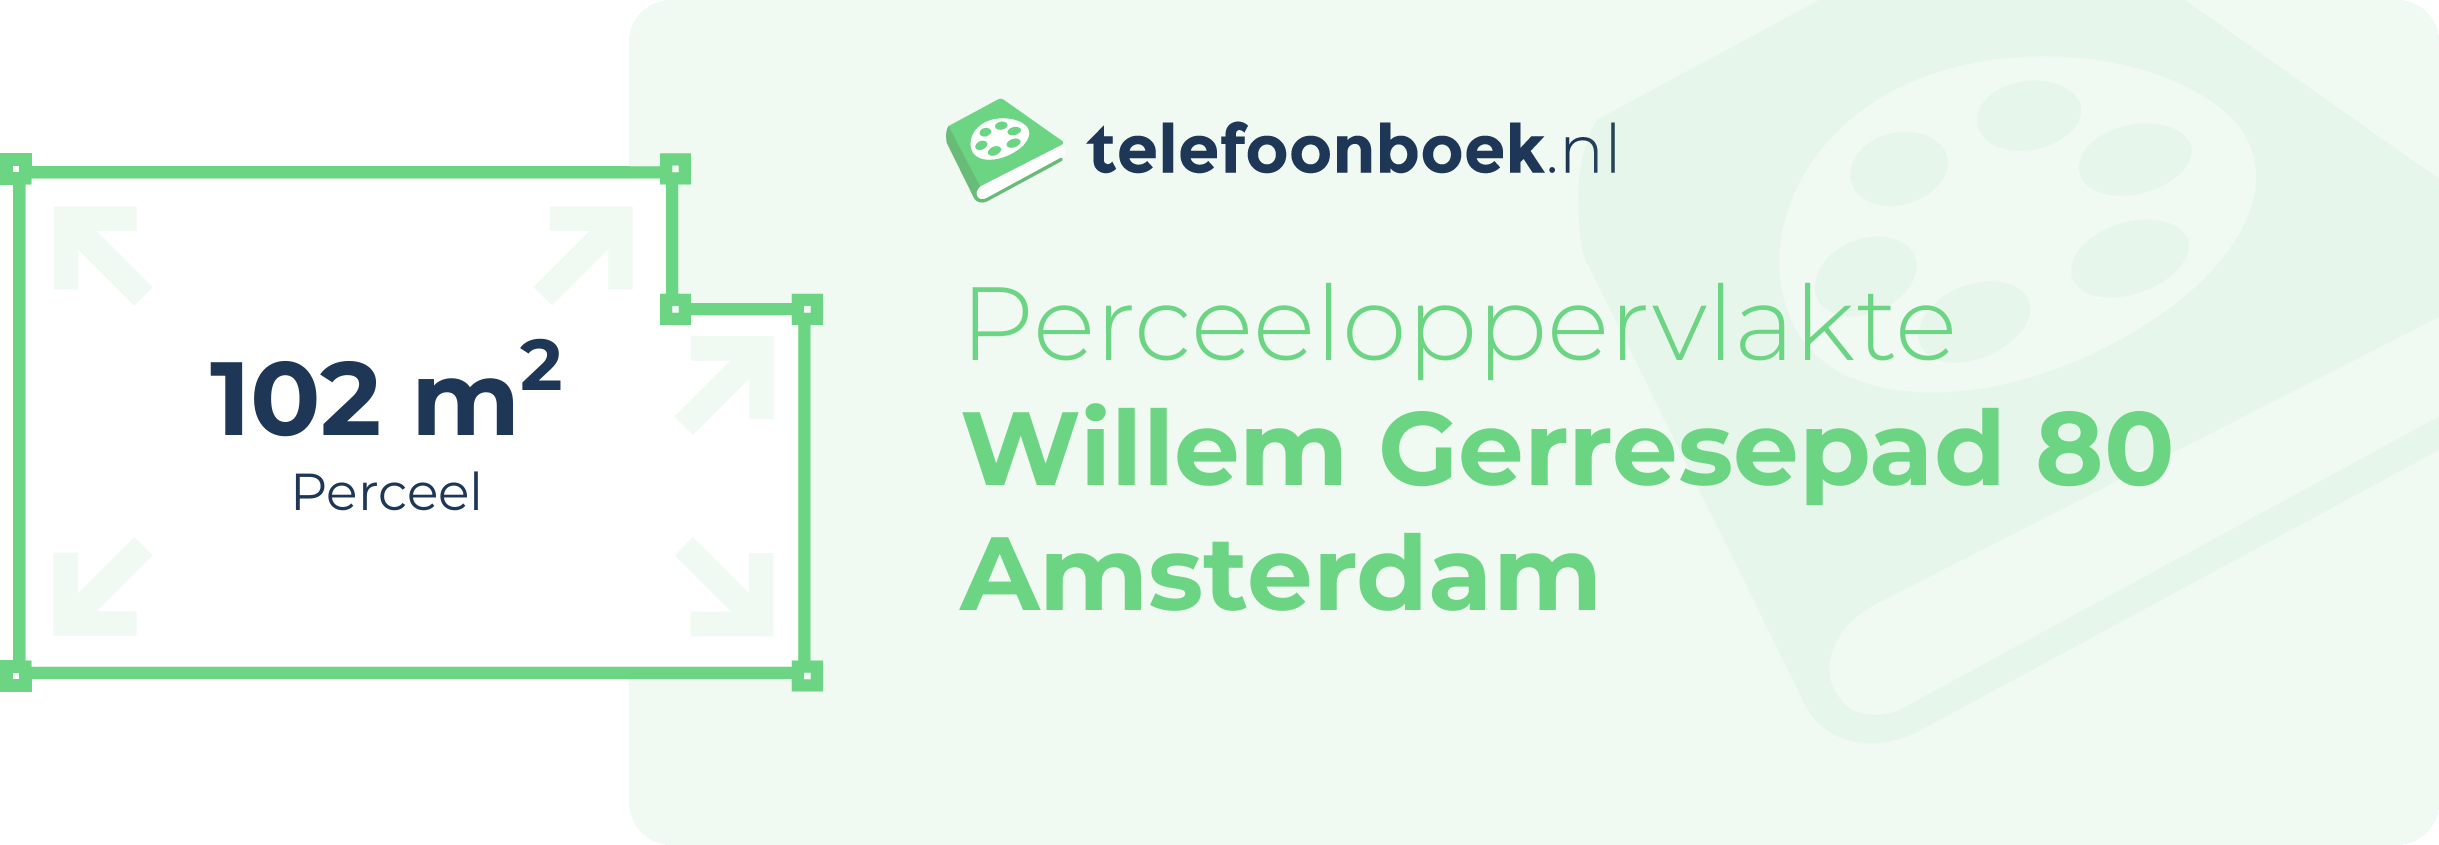 Perceeloppervlakte Willem Gerresepad 80 Amsterdam